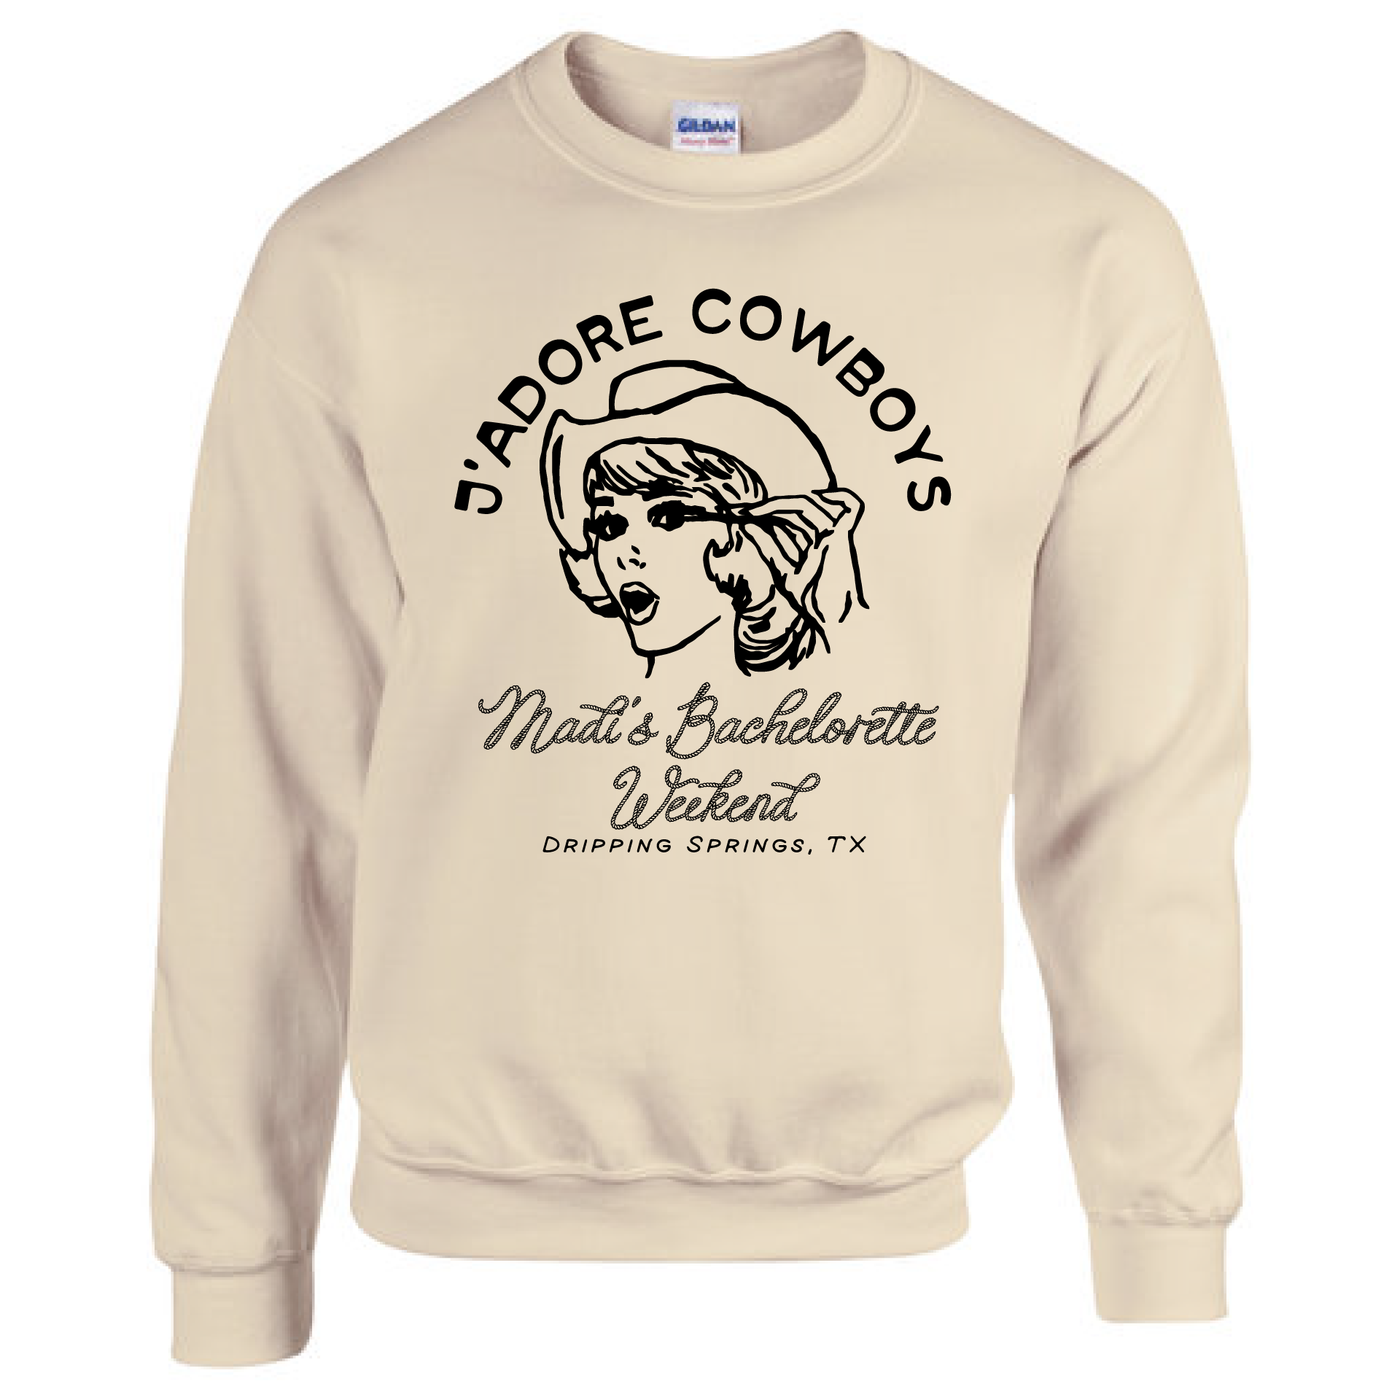 J'adore Cowboys Cowgirls Bachelorette Party Sweatshirt